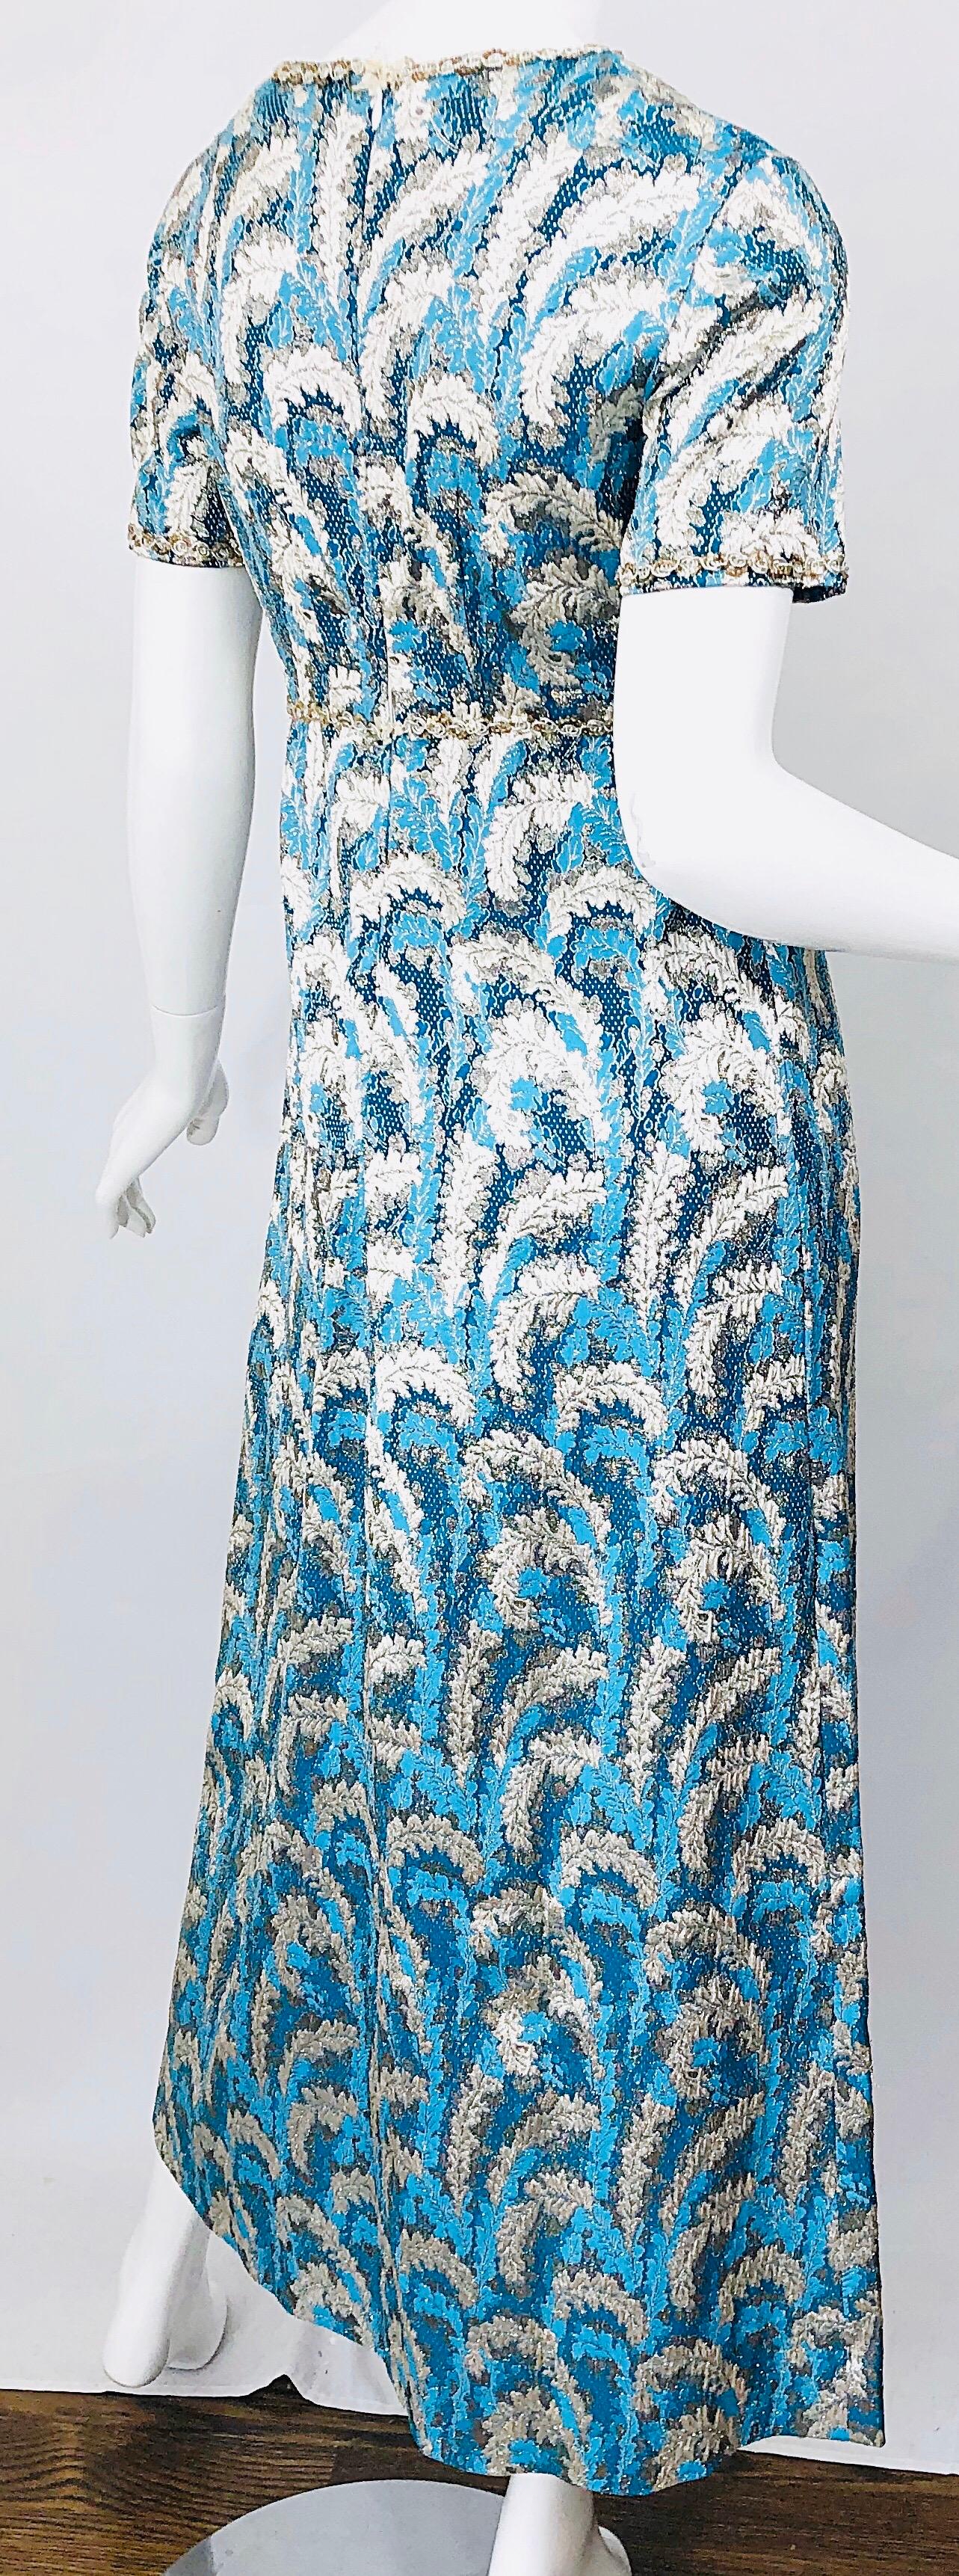 1960s Oscar de la Renta Turquoise Blue Silver Silk Brocade Sequin 60s Gown Dress For Sale 2